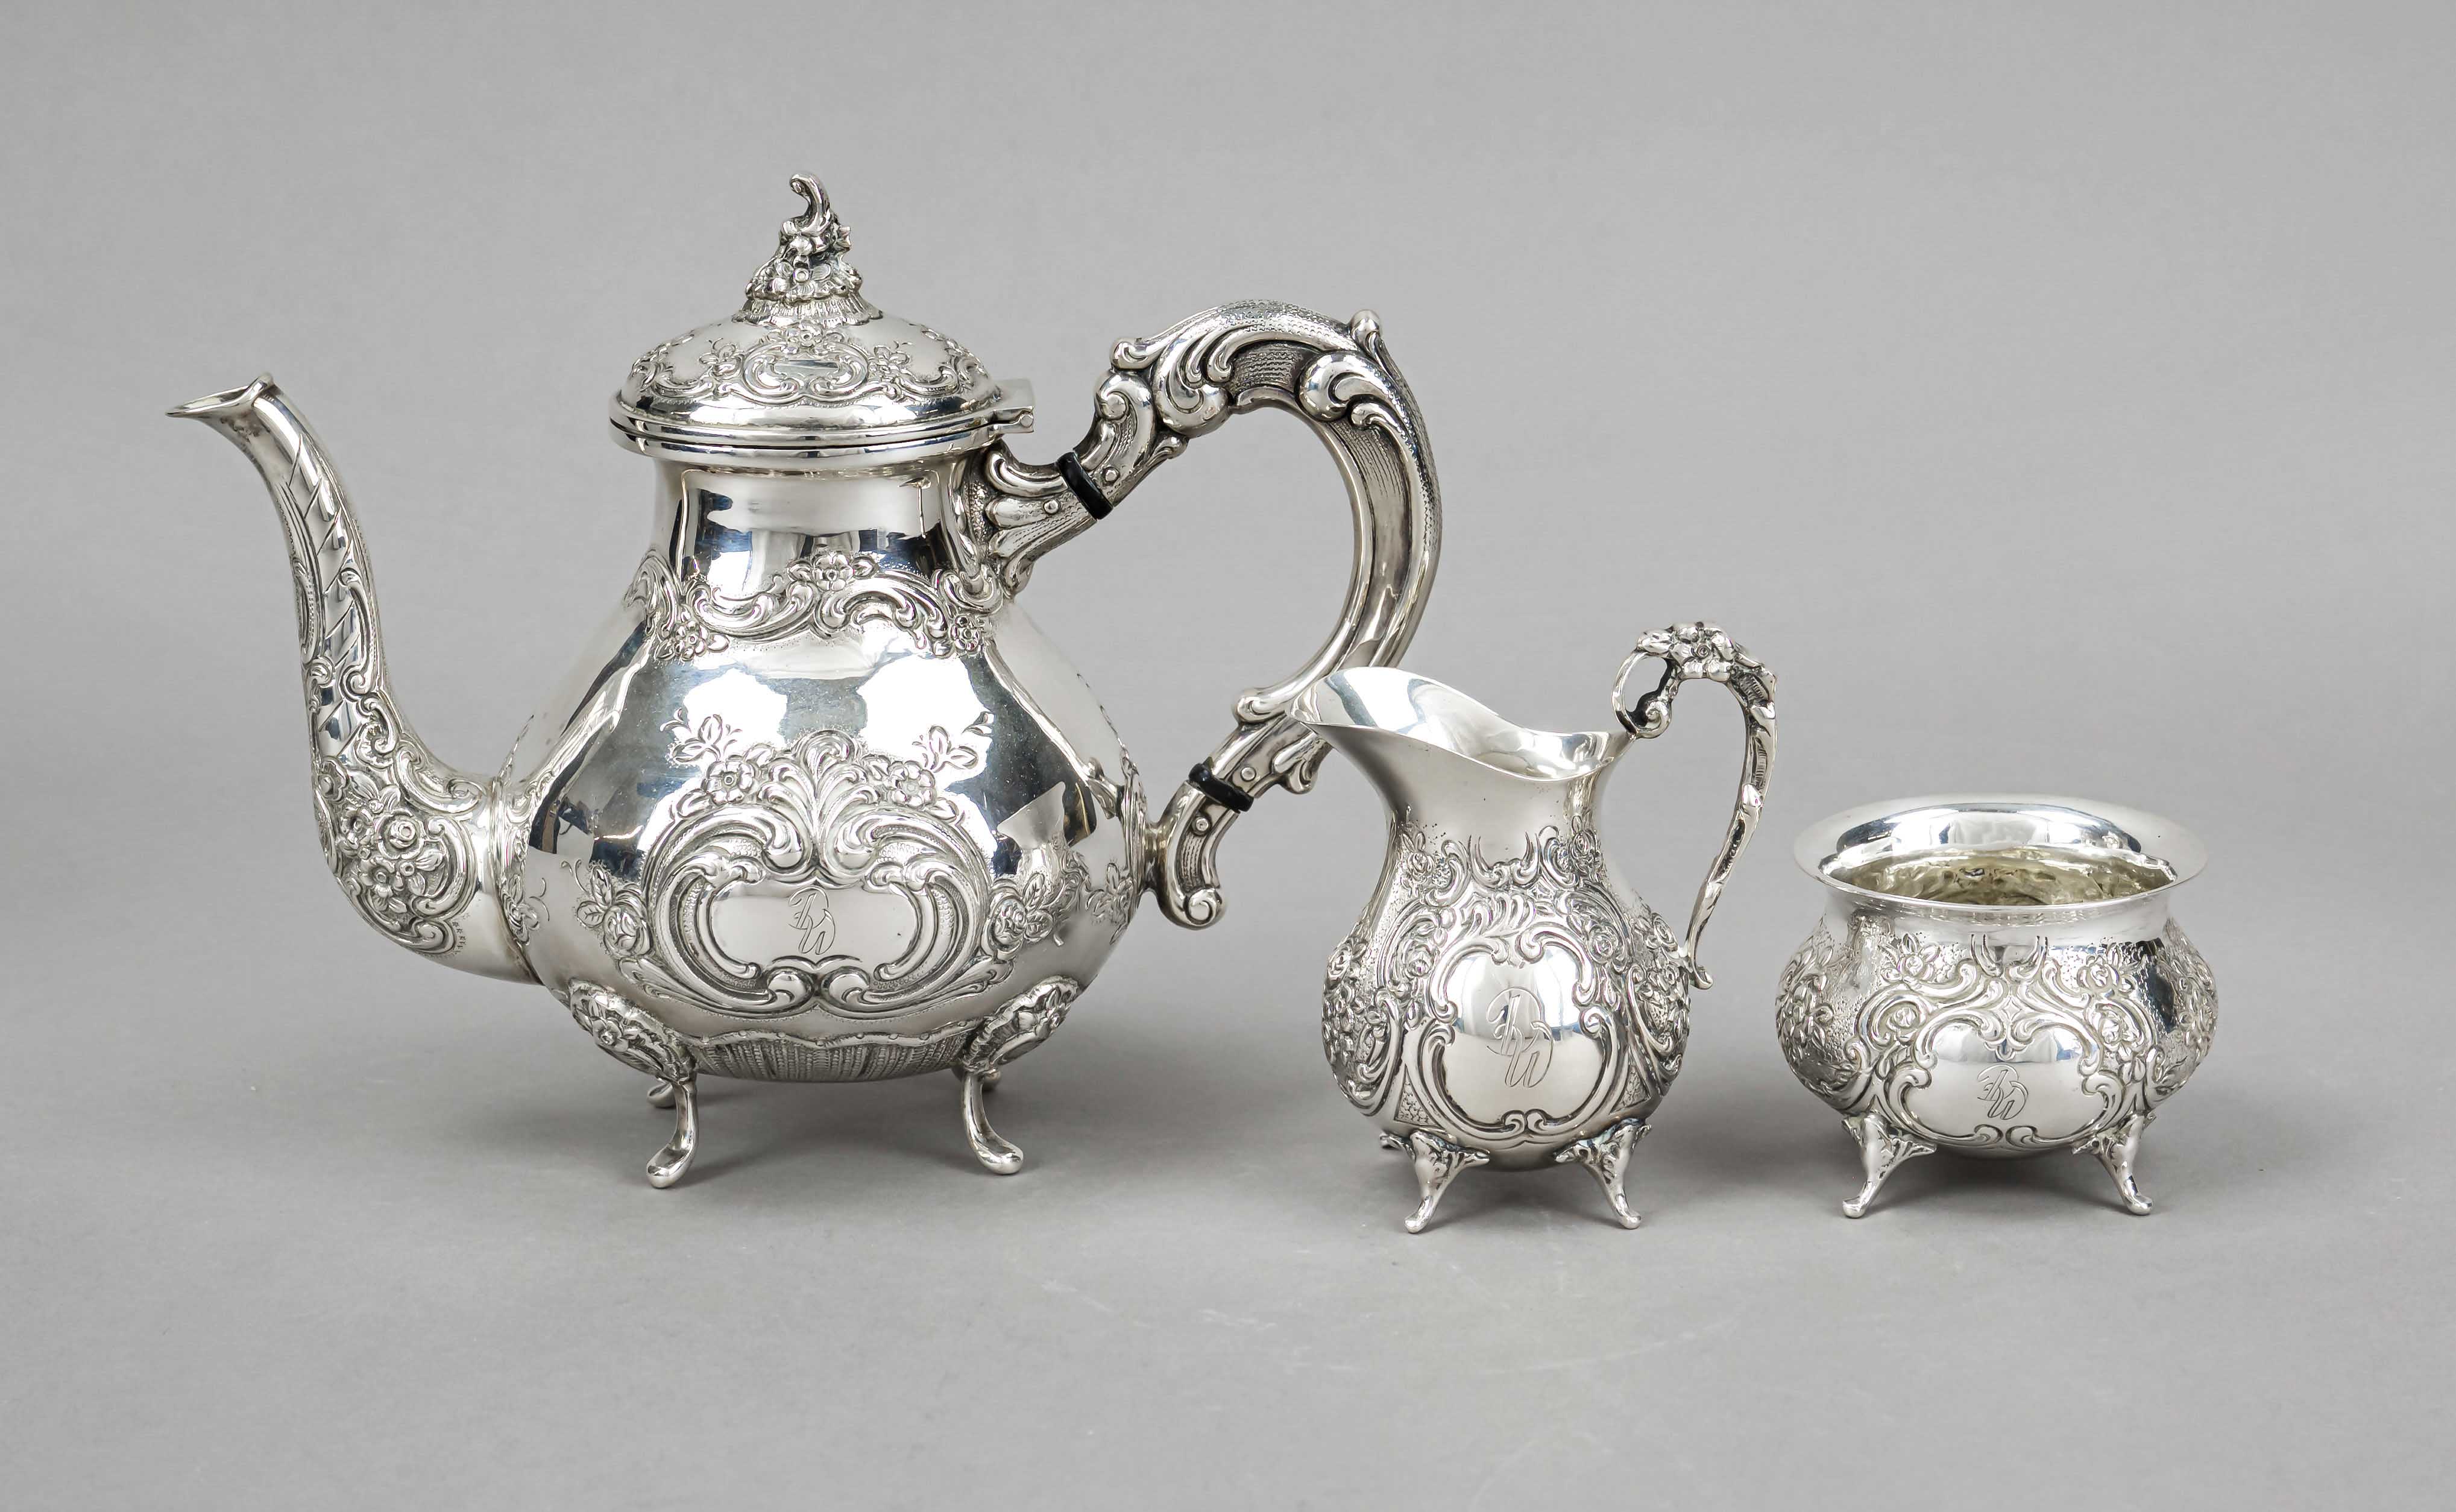 A three-piece mocha pot, 20th century, silver 835/000, the interior partly gilt, of neo-baroque